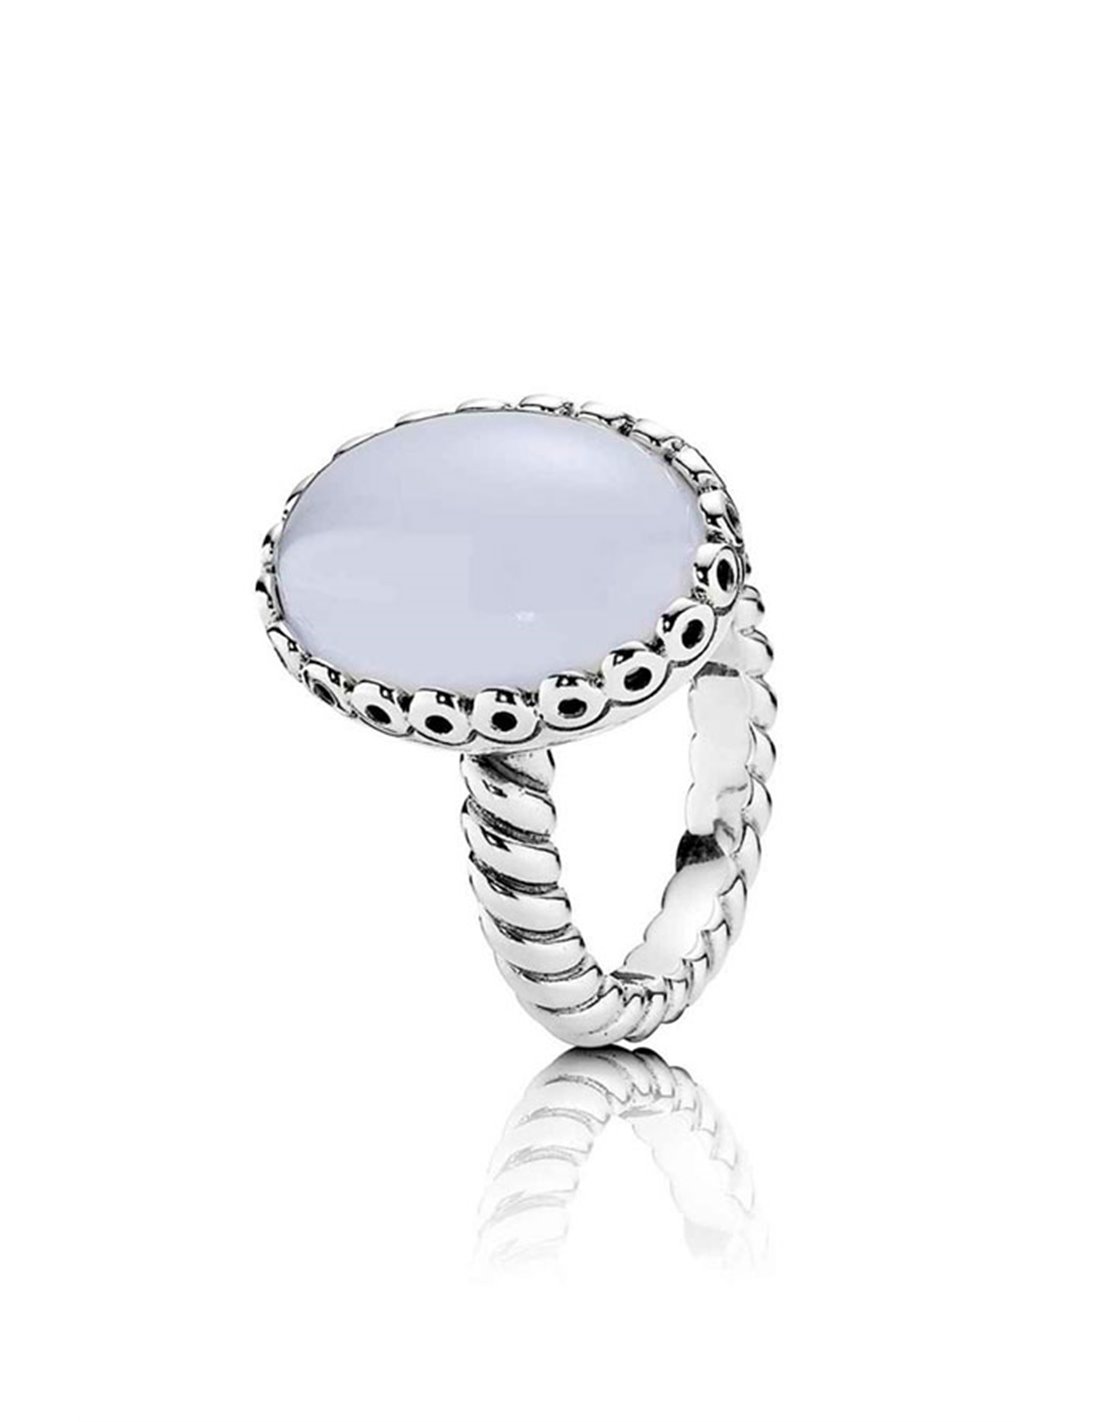 Genuine Pandora Grey Moonstone Oval Ring Size 54 💕 925 ALE Very Rare | eBay